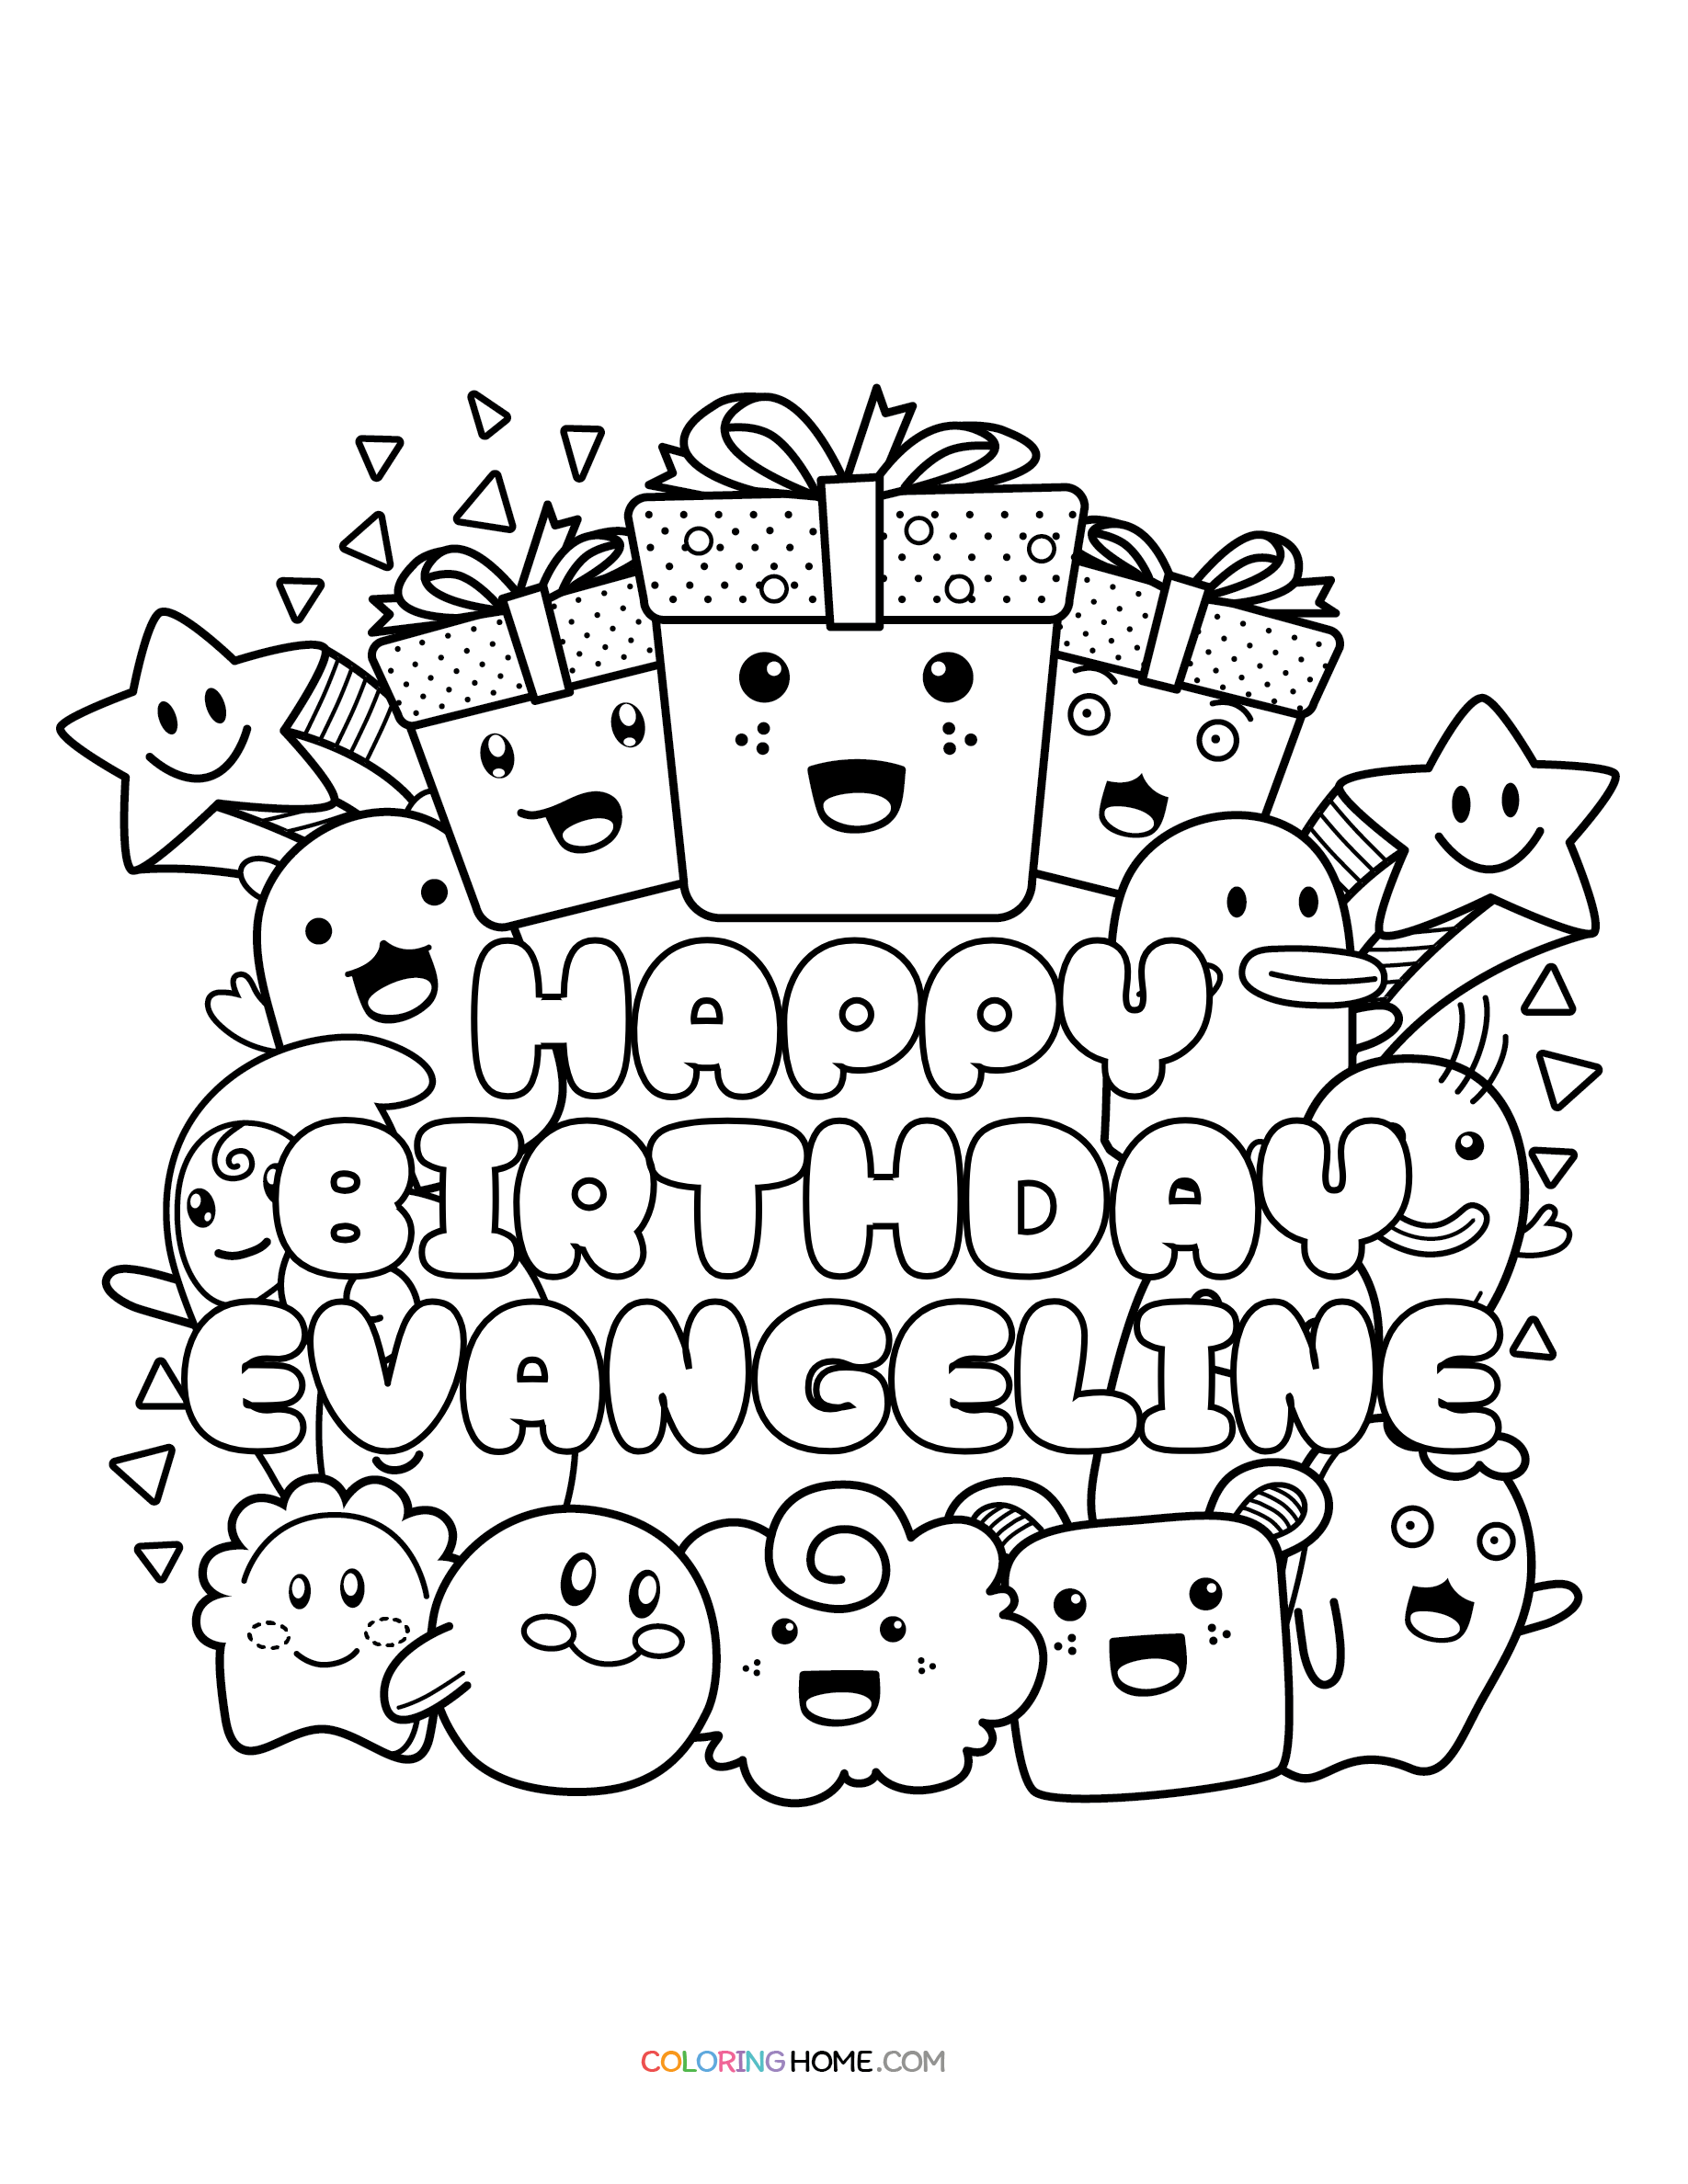 Happy Birthday Evangeline coloring page